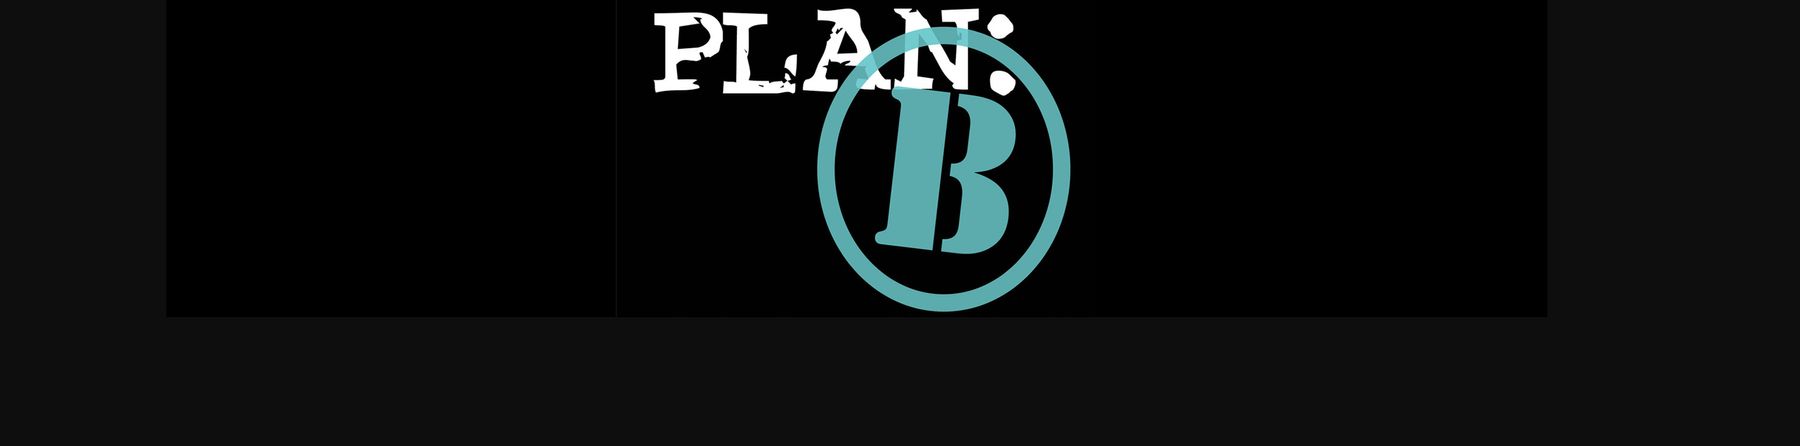 The Plan B Band